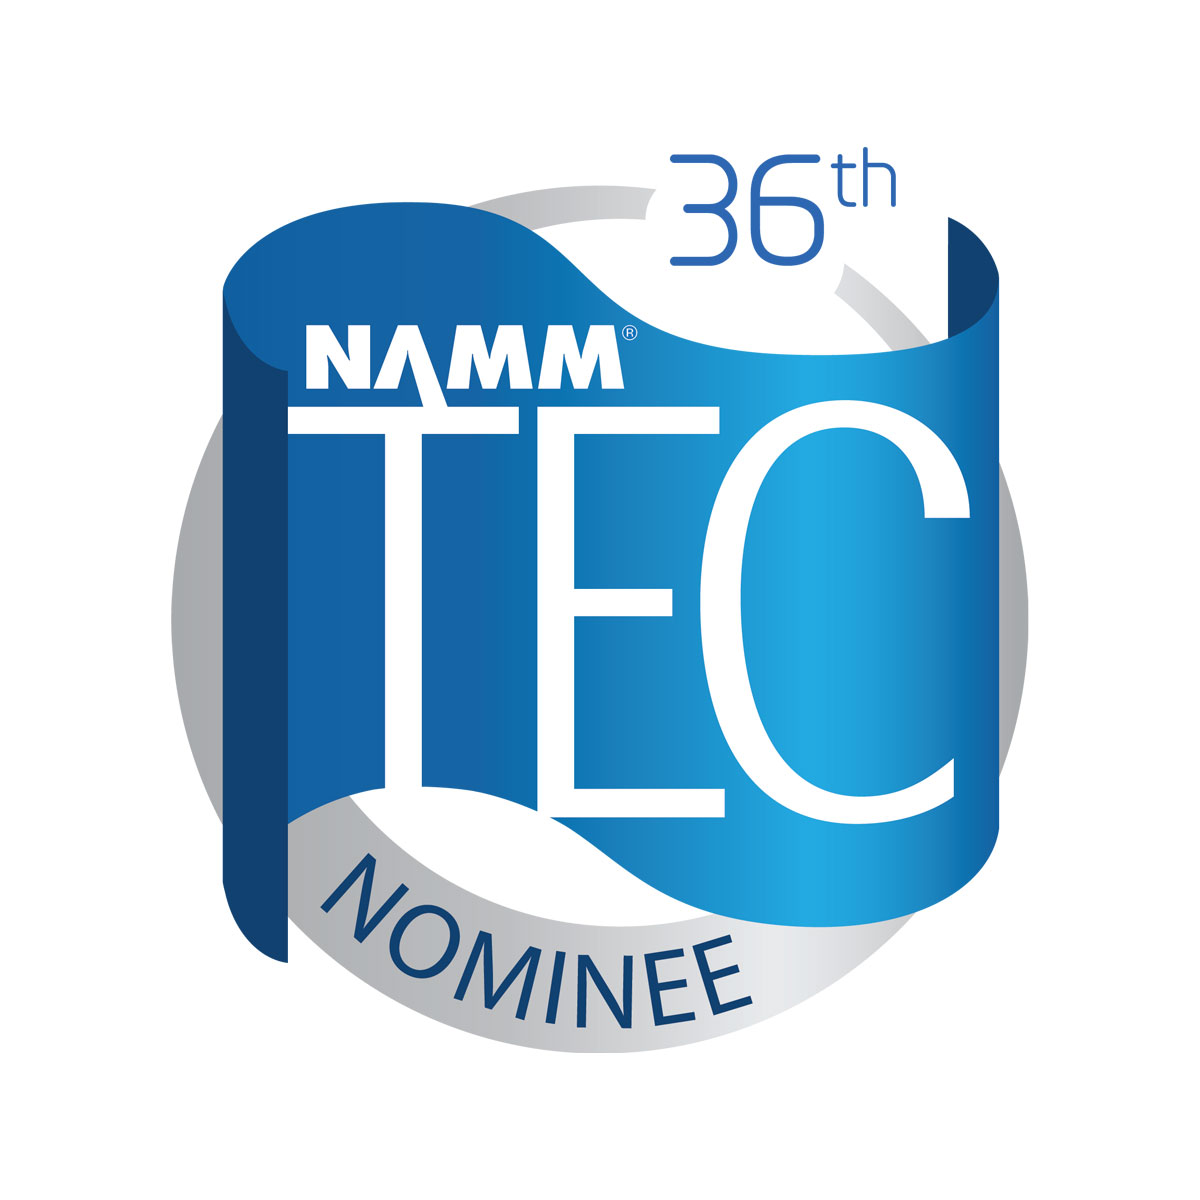 NAMM TEC36 Awards Nominee